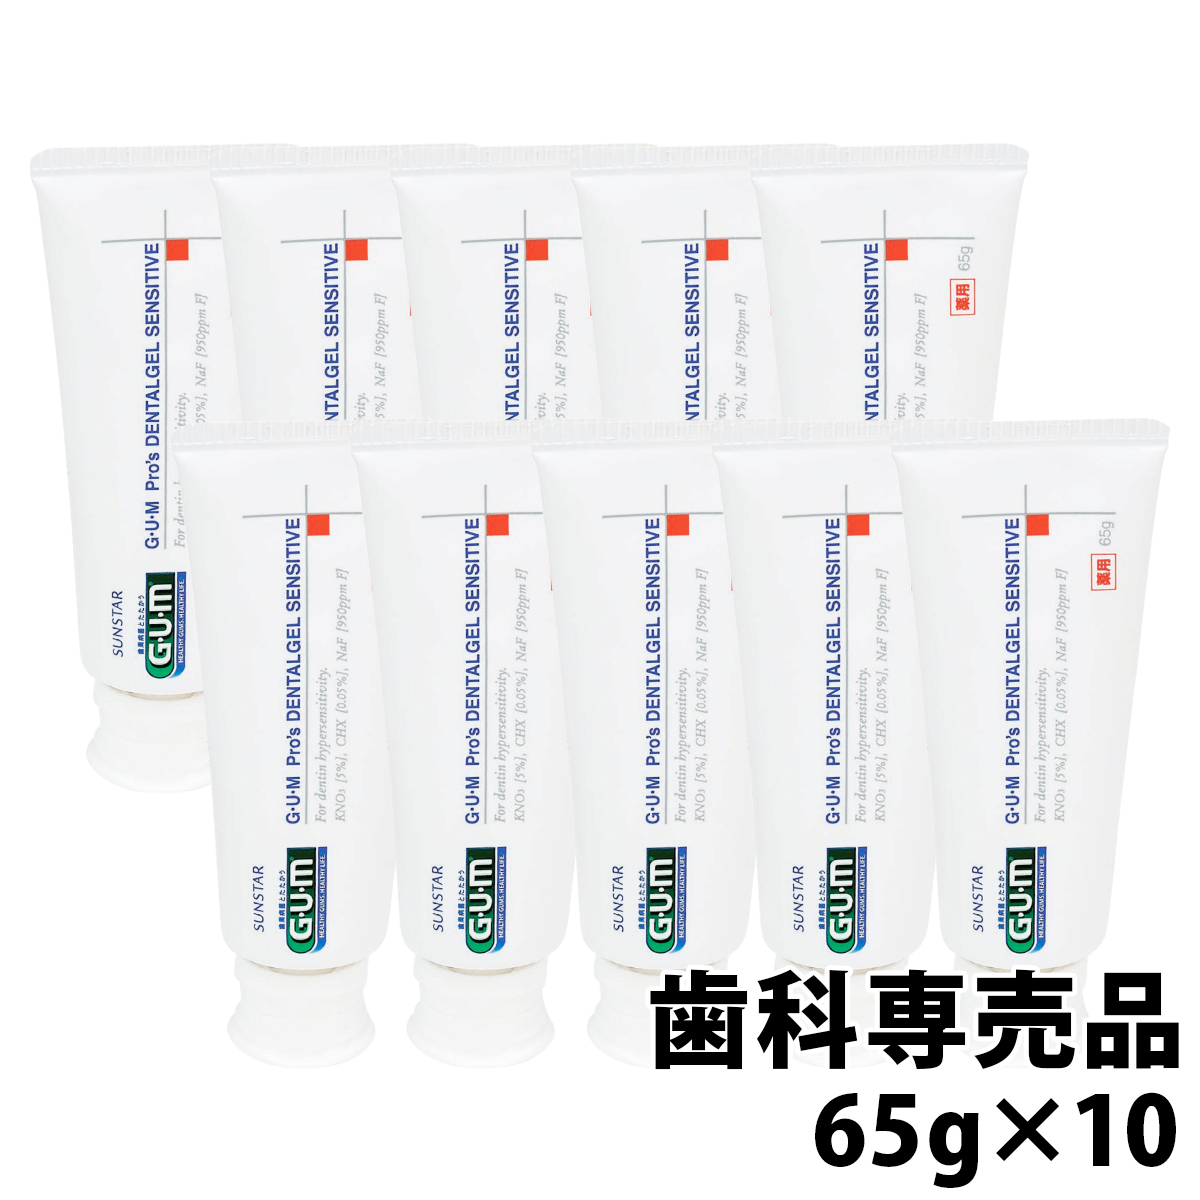 SUNSTAR(日用品) ガム・プロズ デンタルジェル センシティブ 65g×10本 G・U・M 歯磨き粉の商品画像